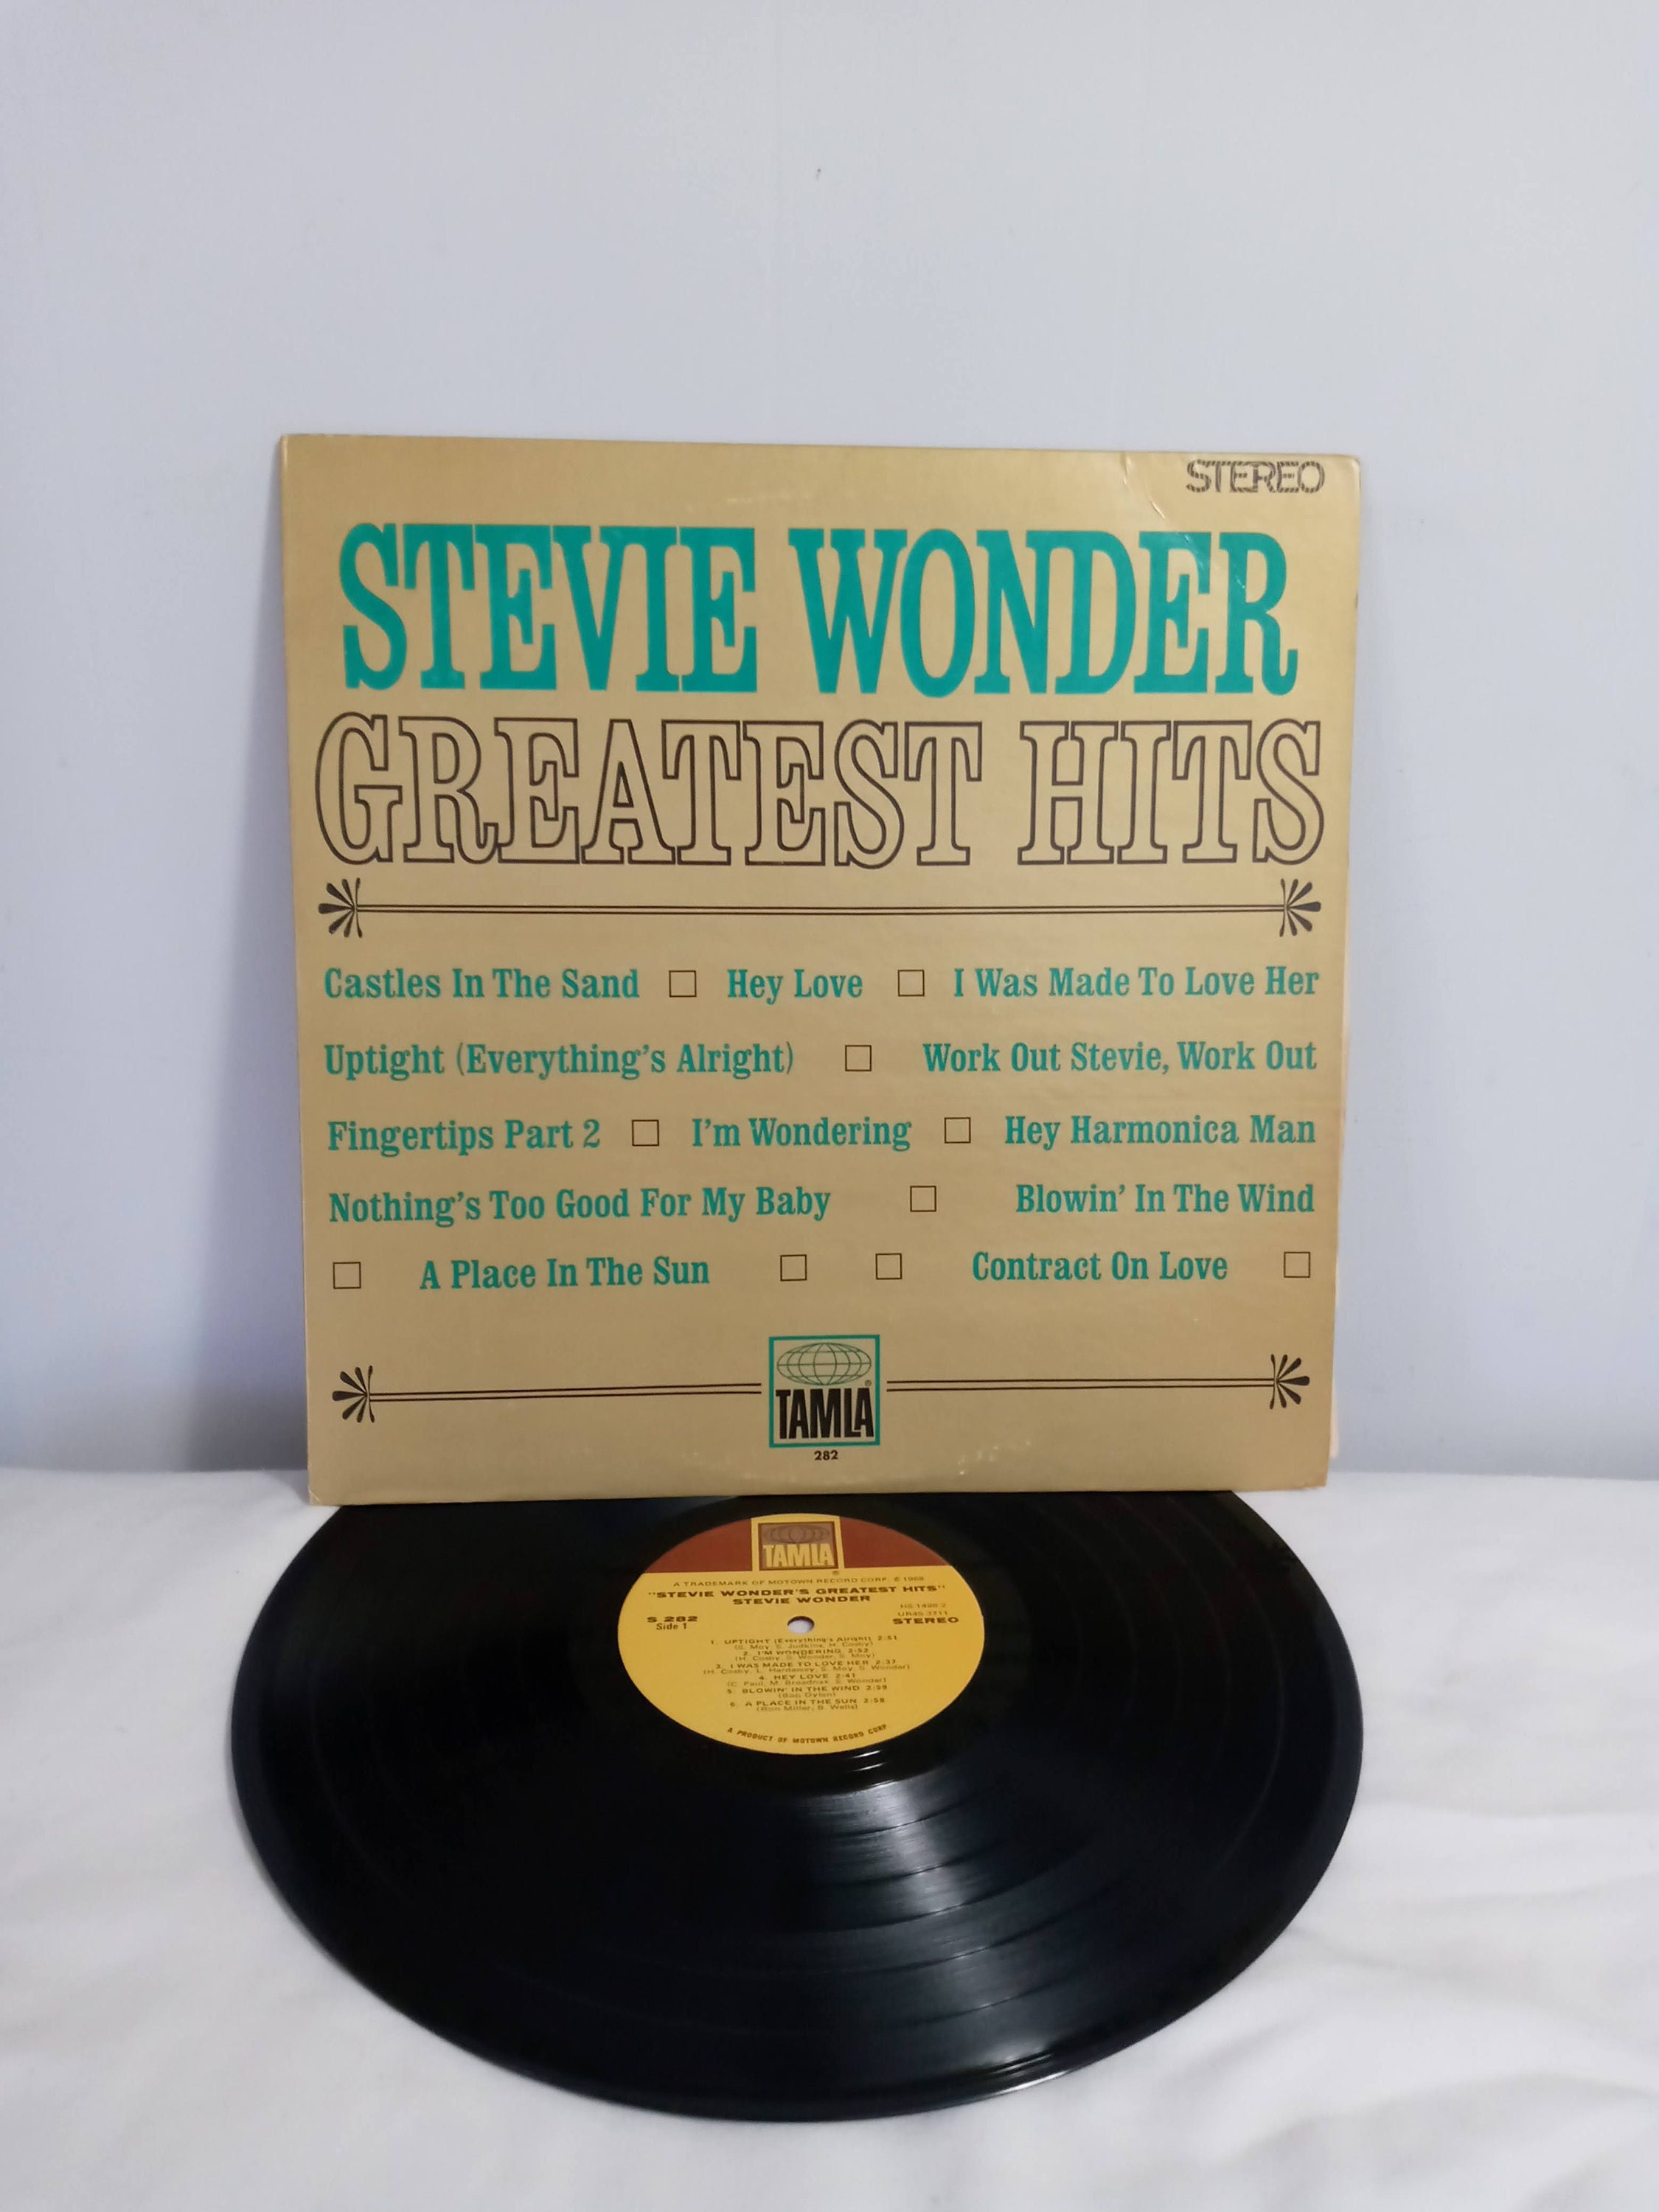 1985 Stevie Wonder Part-time Lover , Vinyl, 12, 45 RPM -  Hong Kong